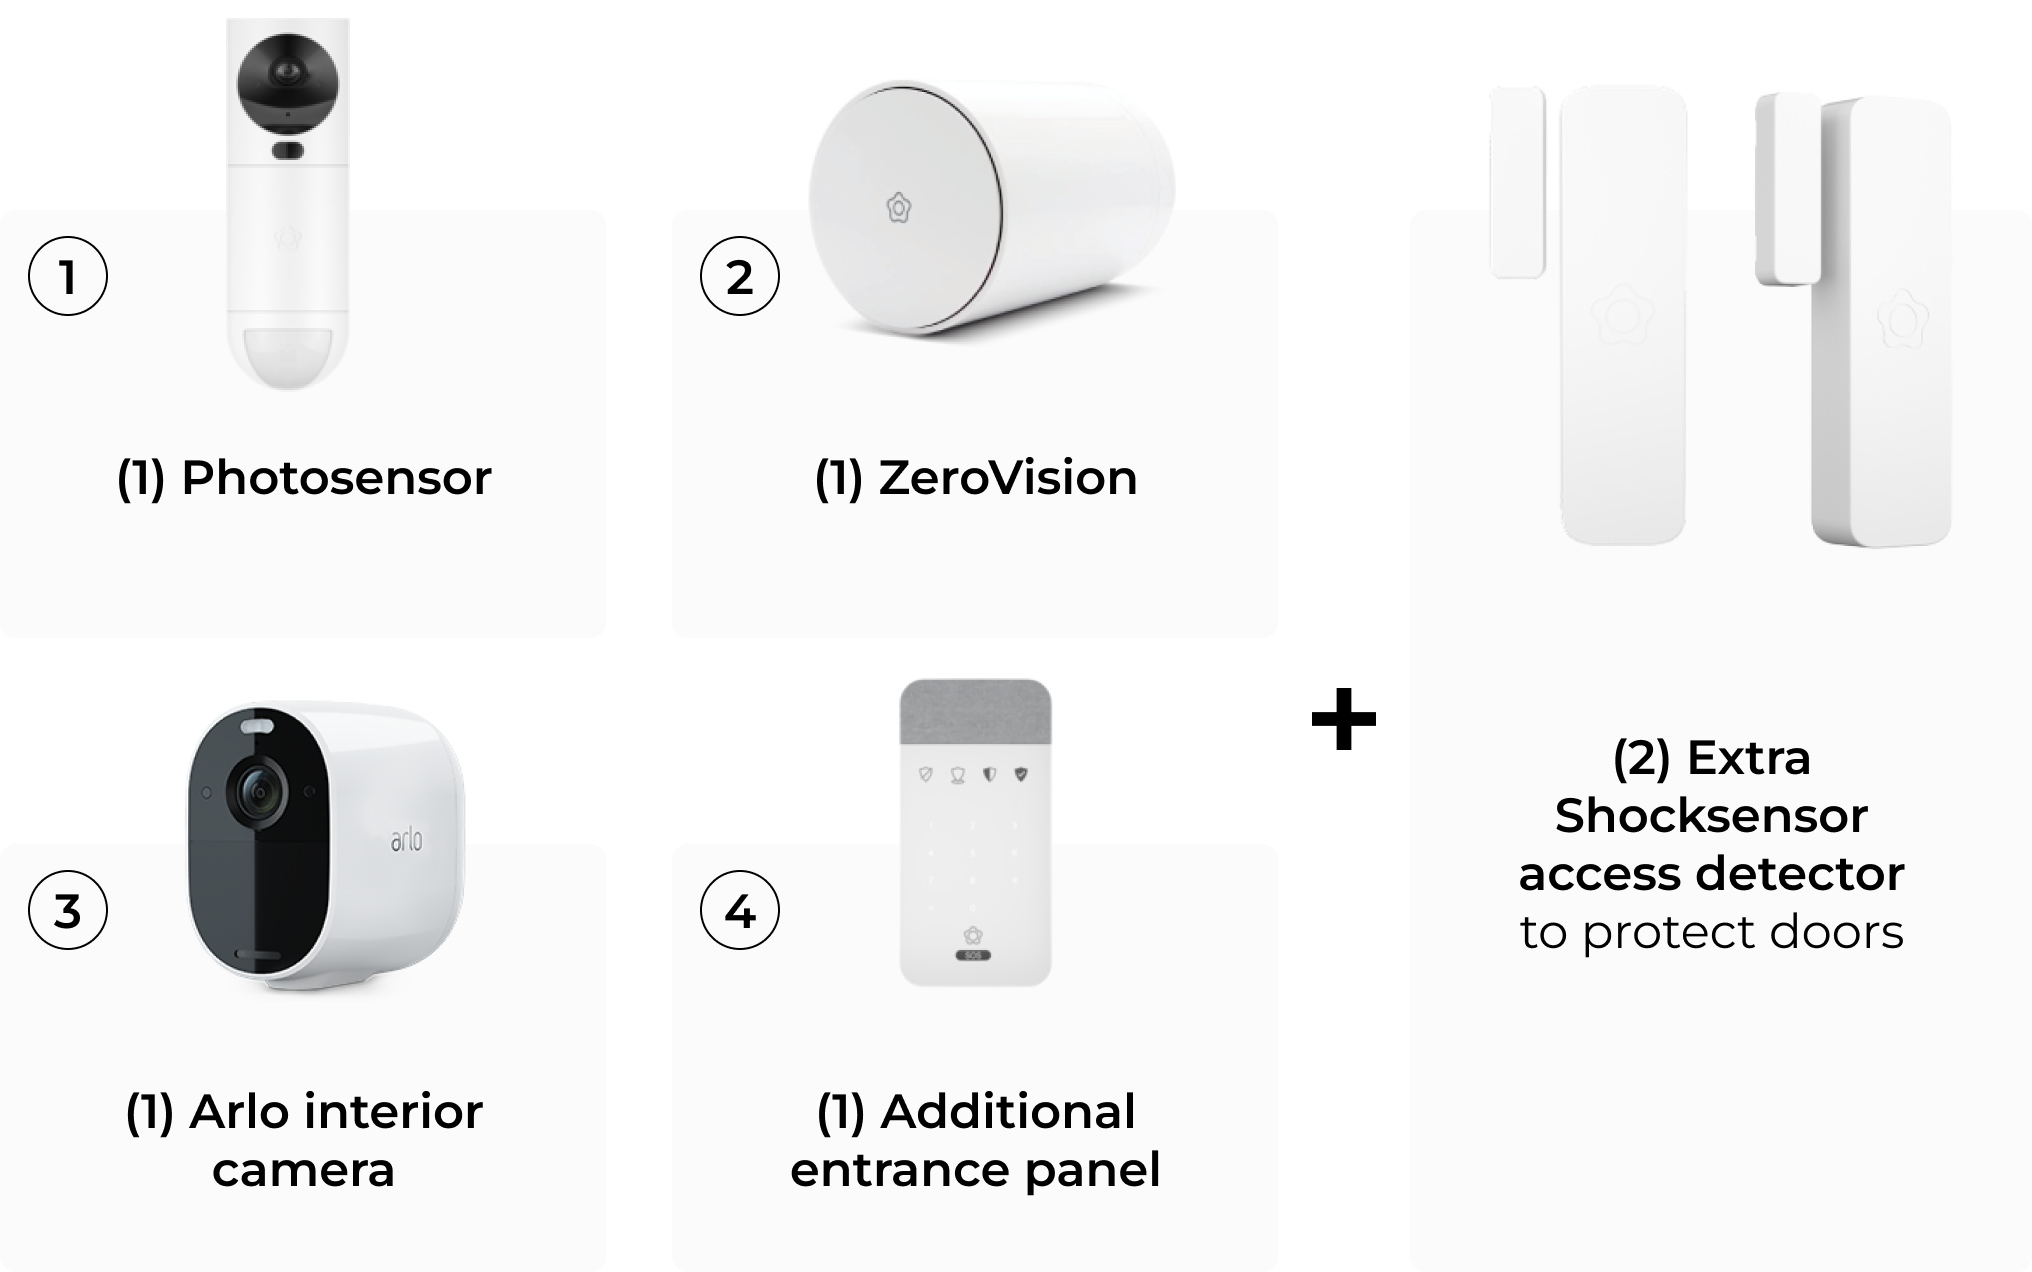 Photosensor | ZeroVision | Arlo interior camera | Additional entrance panel | Extra Shocksensor access detector to protect doors